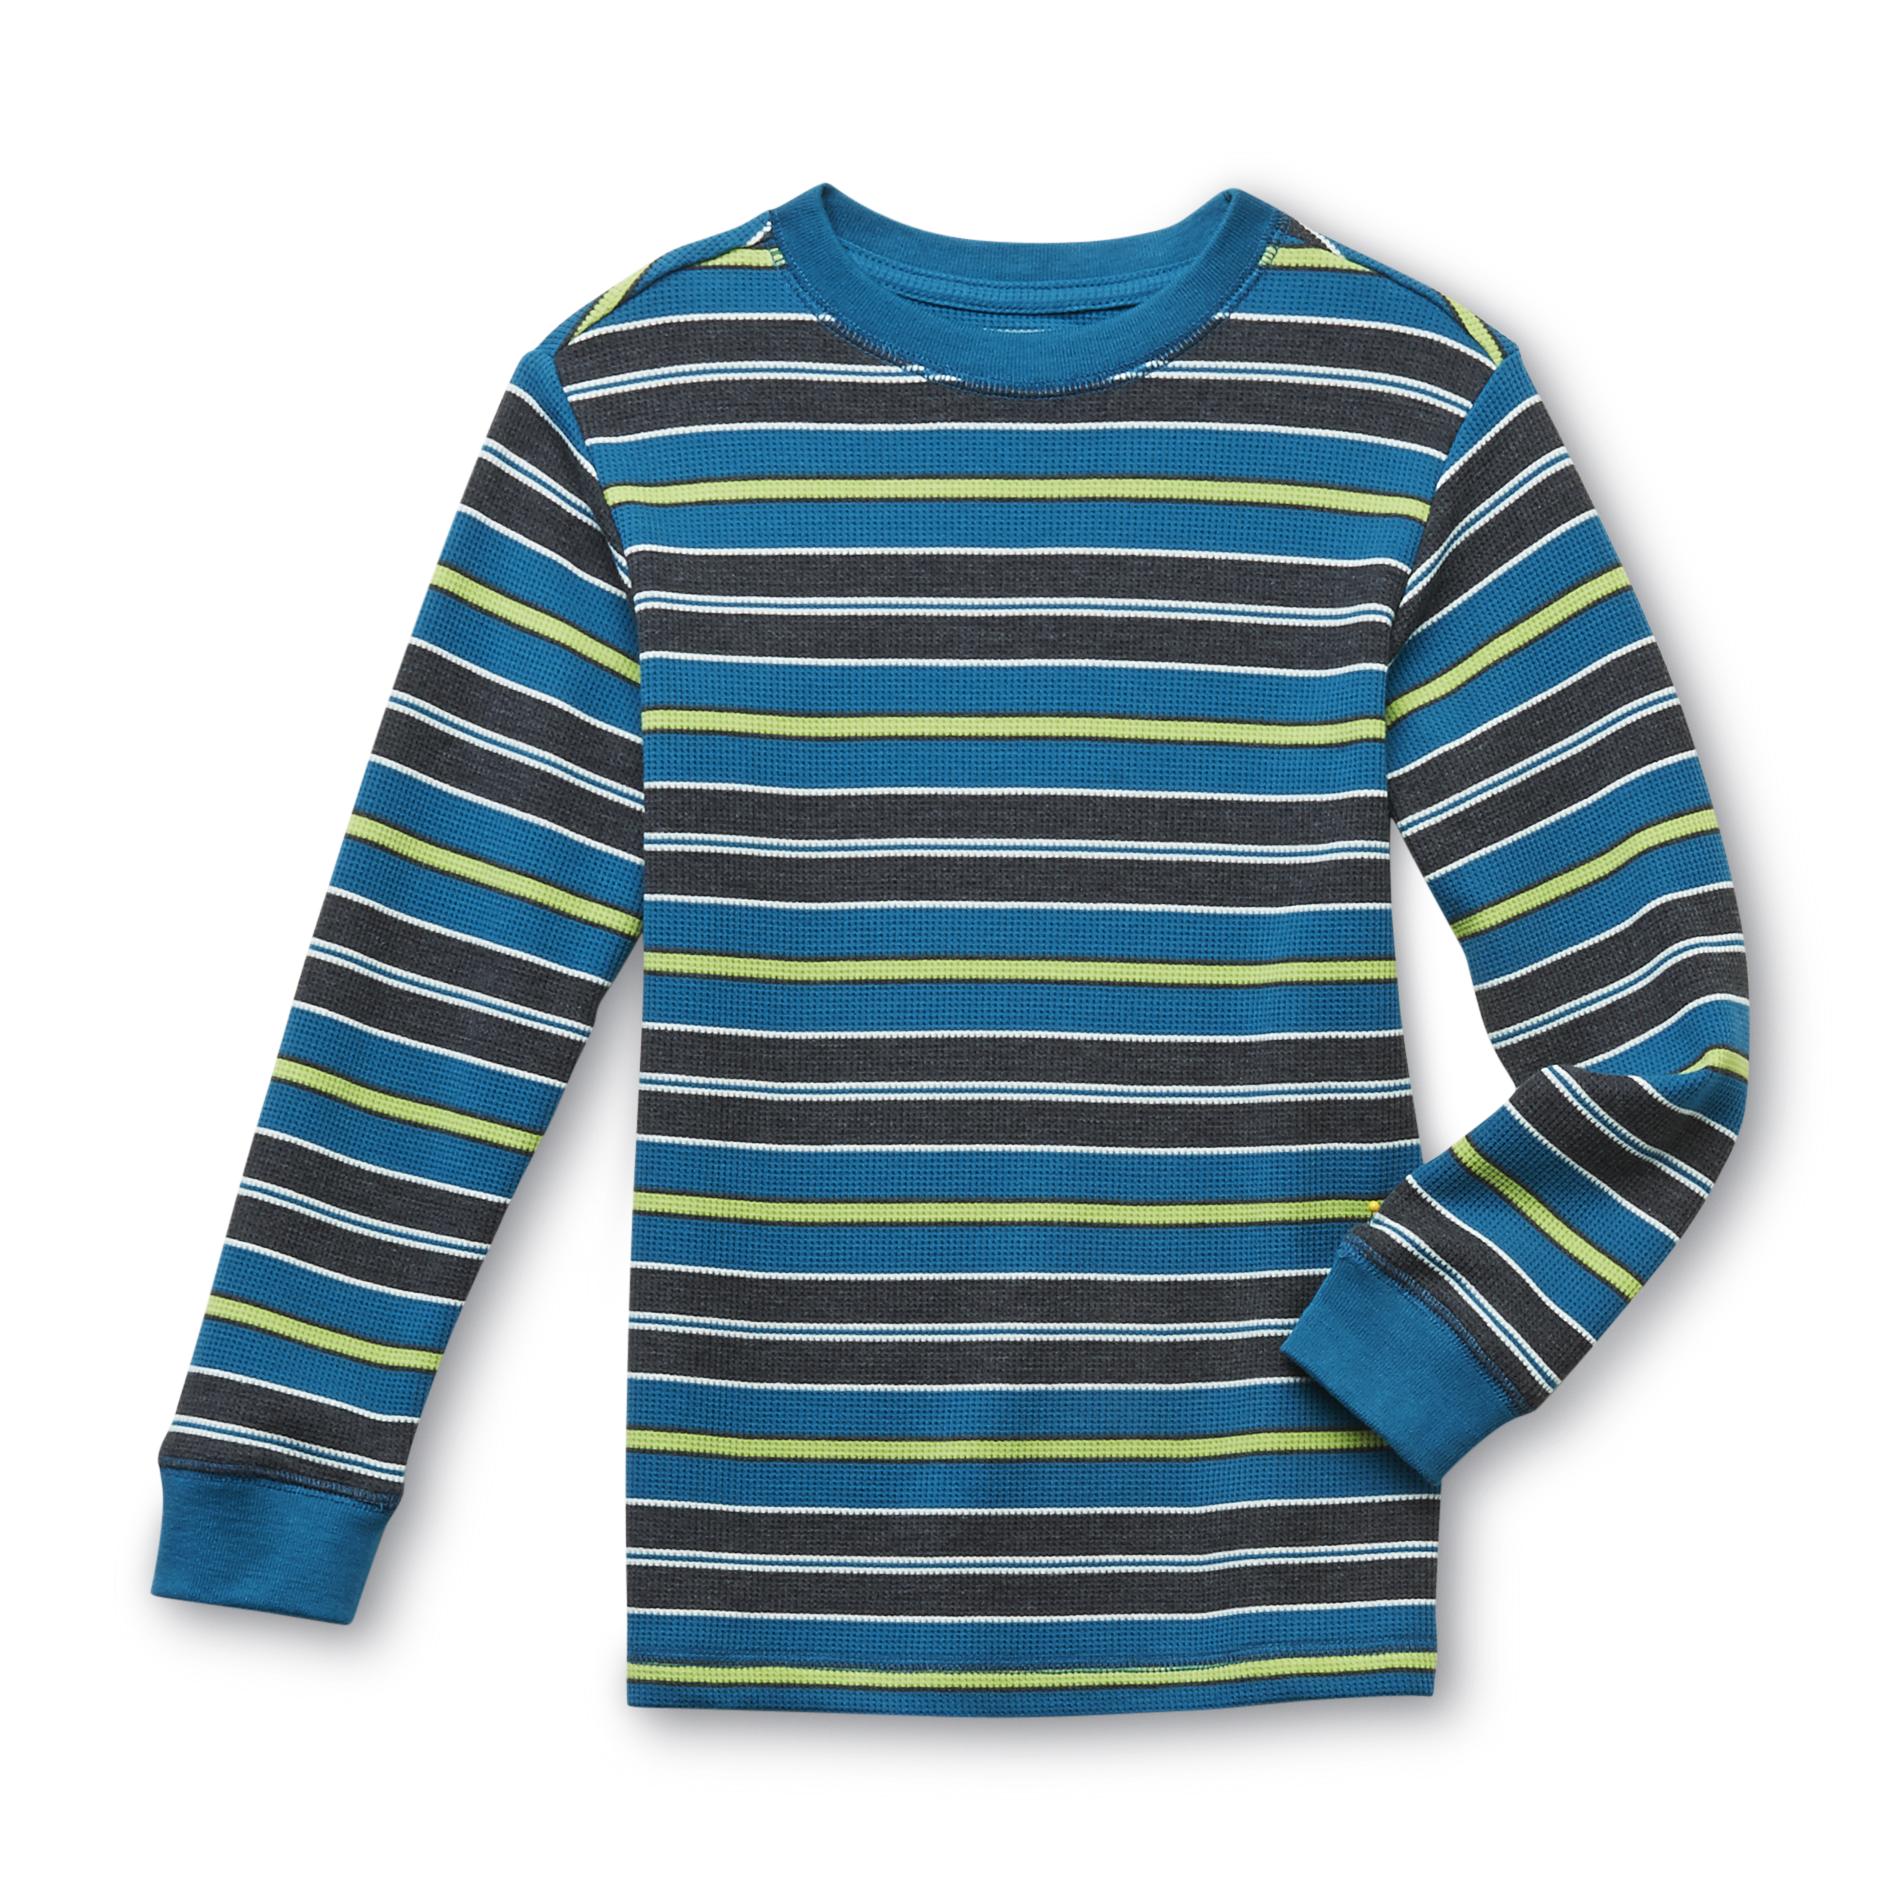 Toughskins Boy's Long-Sleeve Thermal T-Shirt - Striped